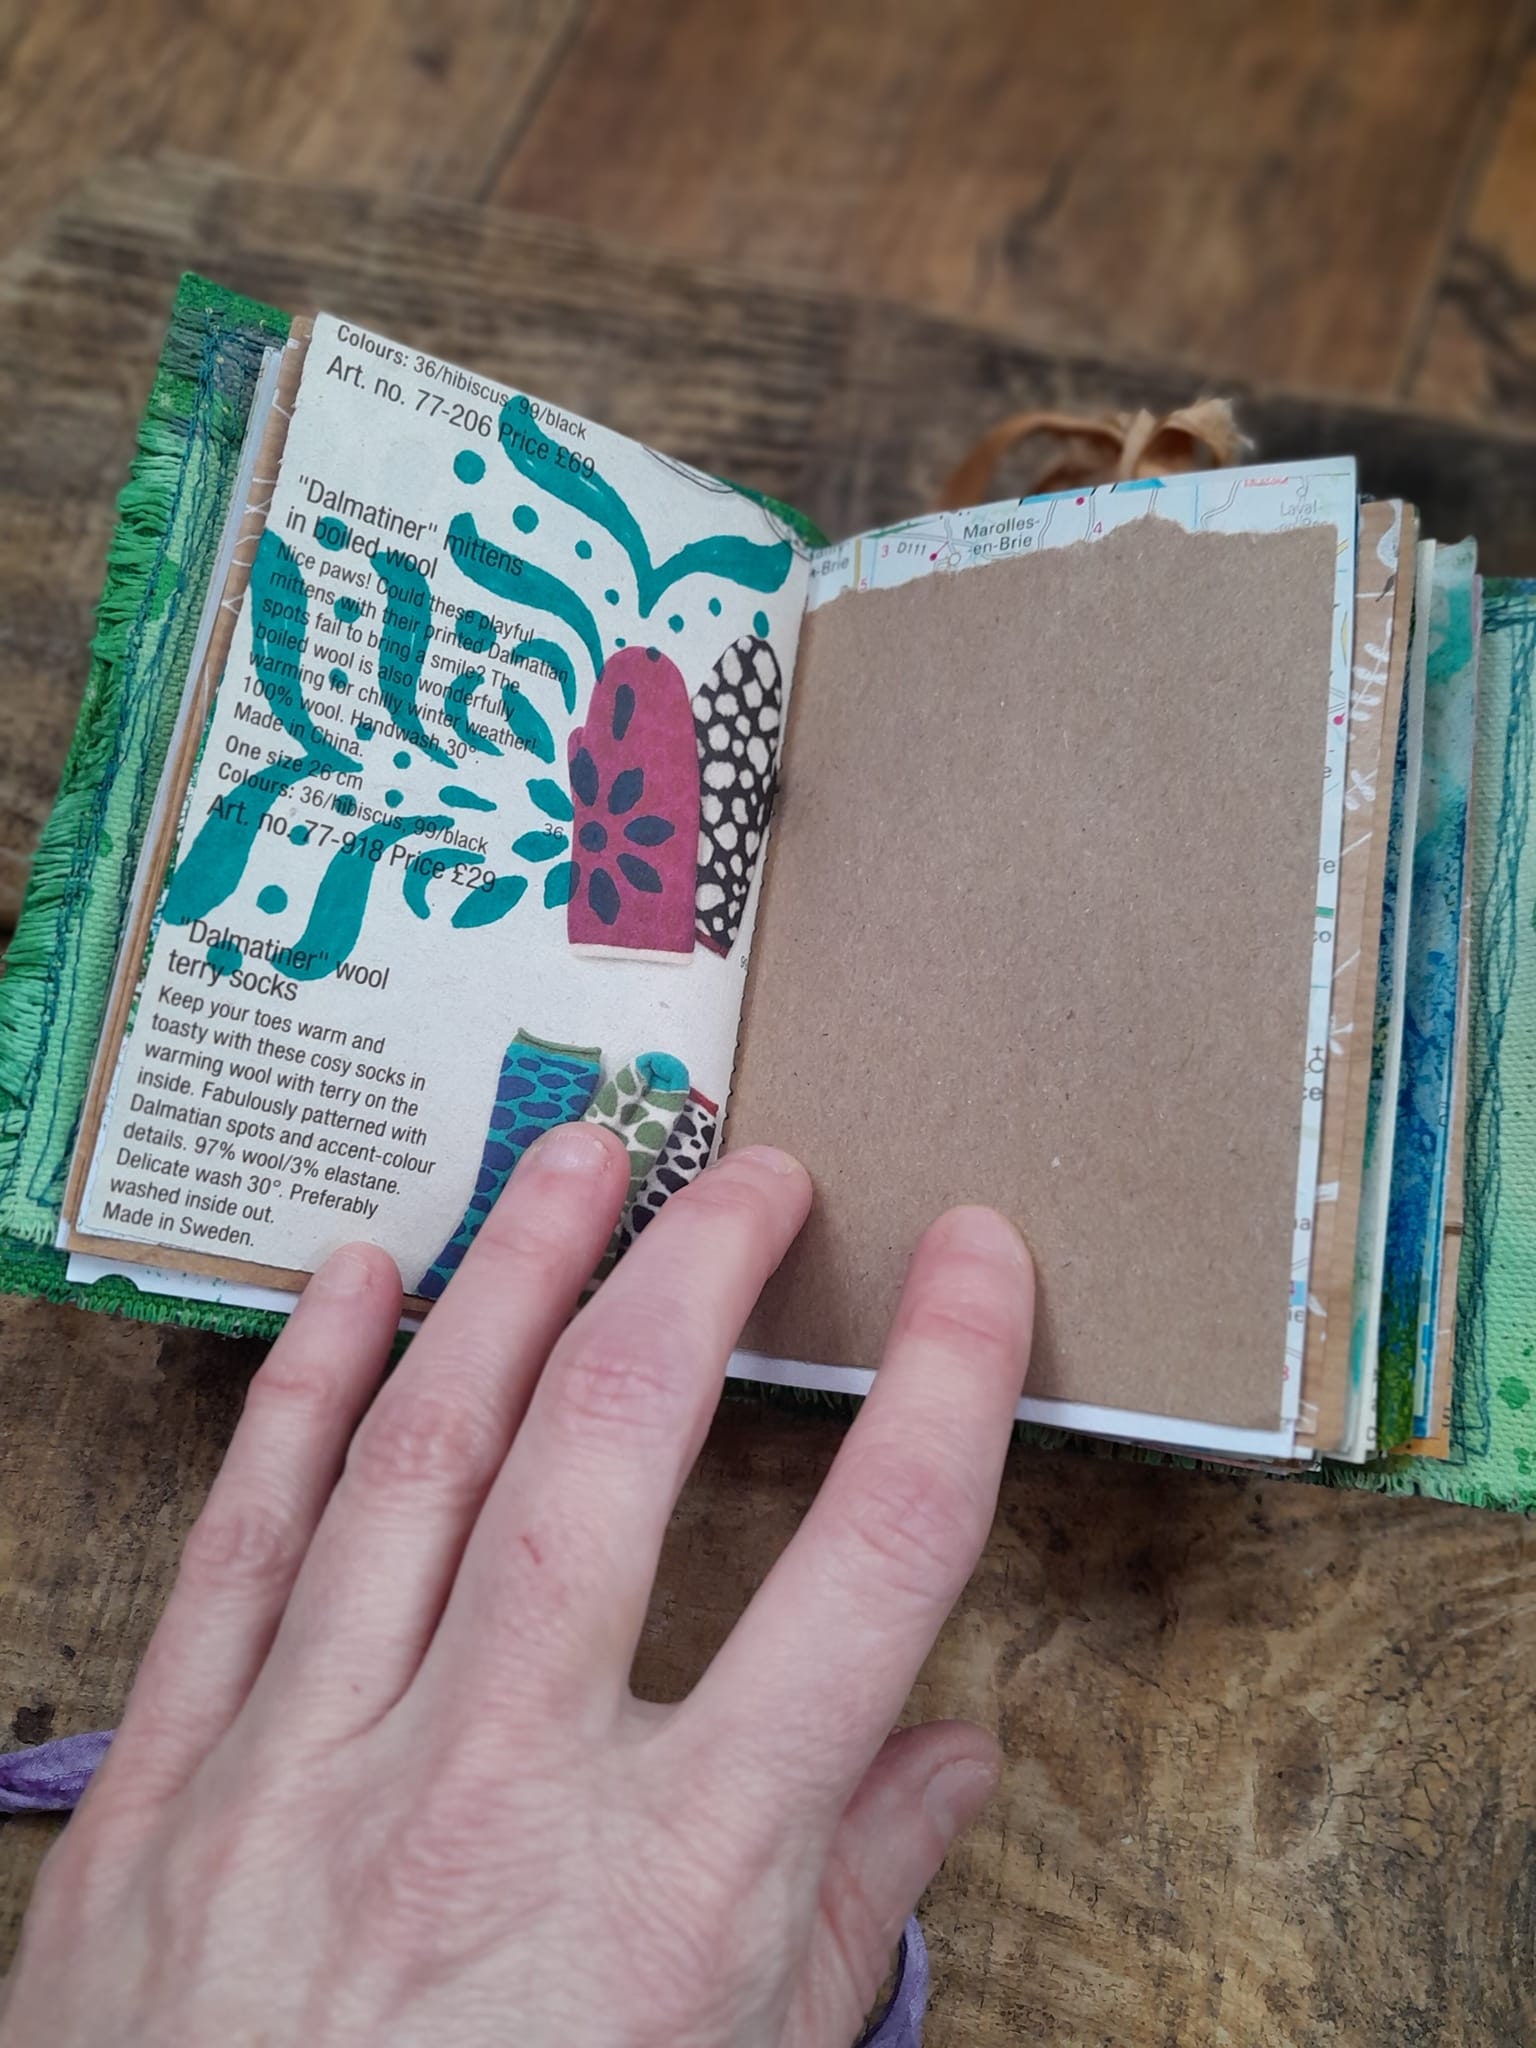 Mixed Media Art Journal Mini Sketch Book Pocket Size Artist Paper  Journaling Hand Bound Books Canvas Abstract Artist Junk Journal Collage 